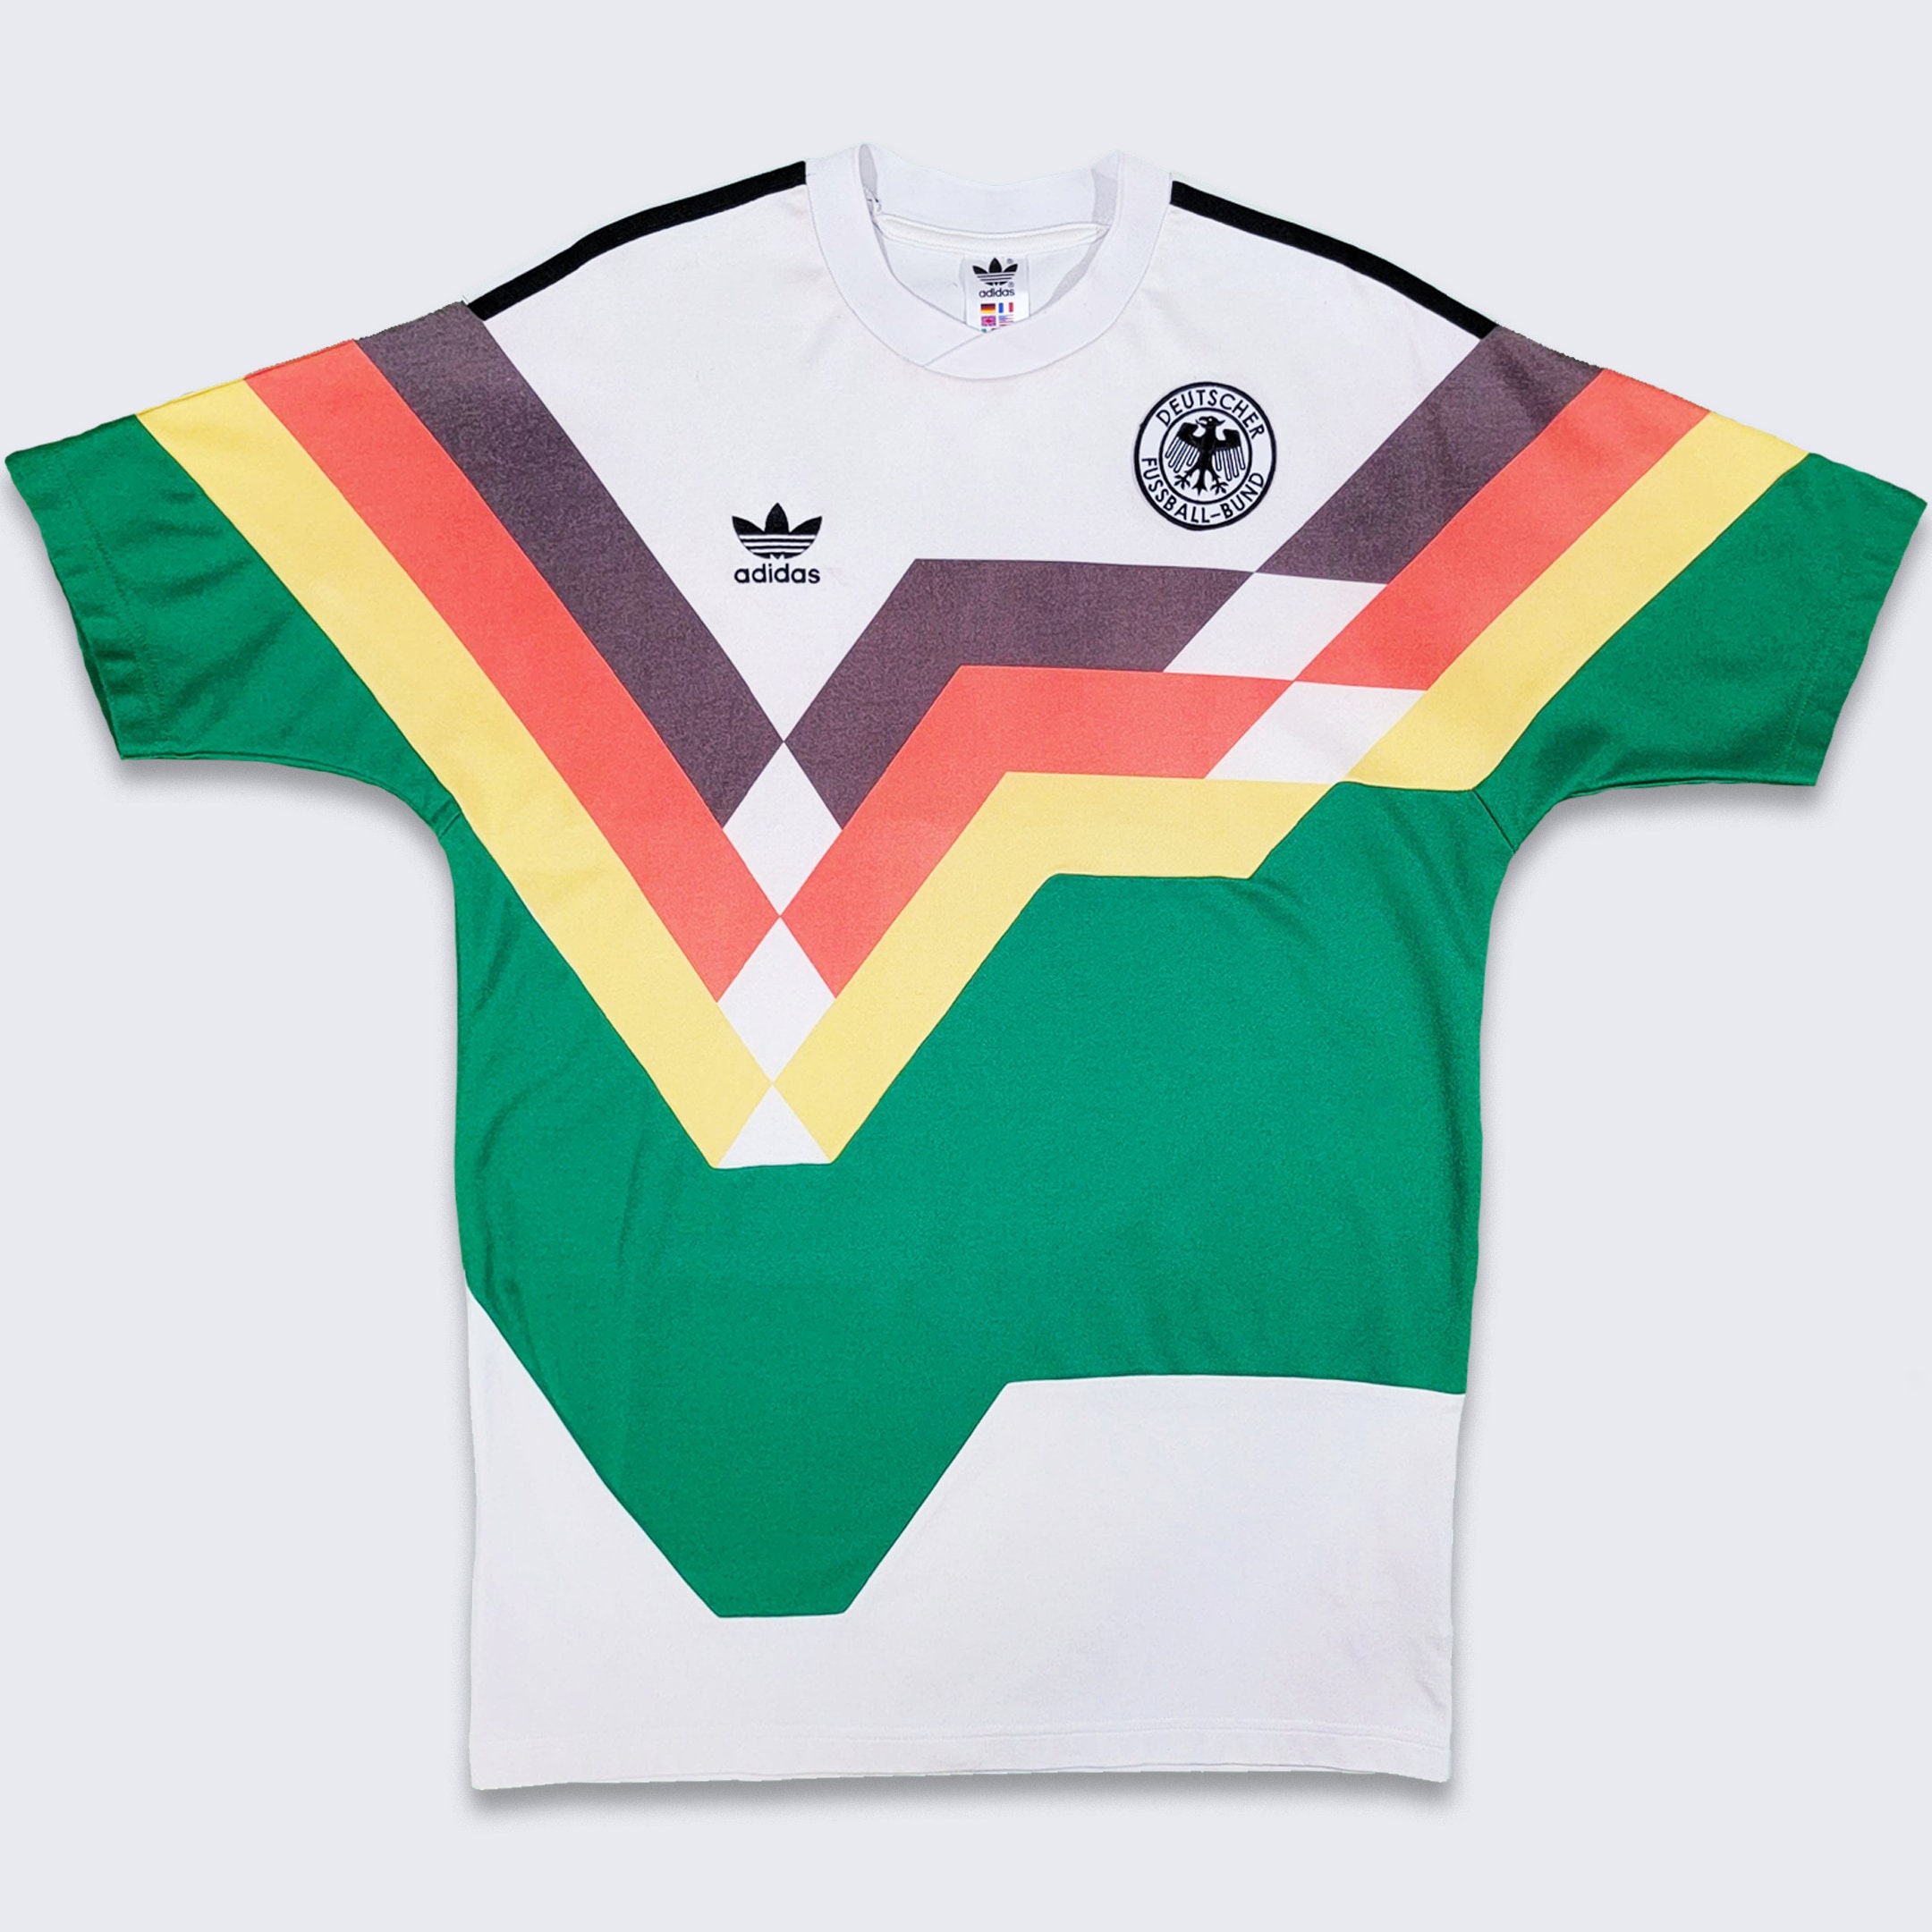 Retro Germany 1990 Soccer Jerseys Matthaus Klinsmann Vintage Shirt Classic  Kit From Prosoccer, $17.73